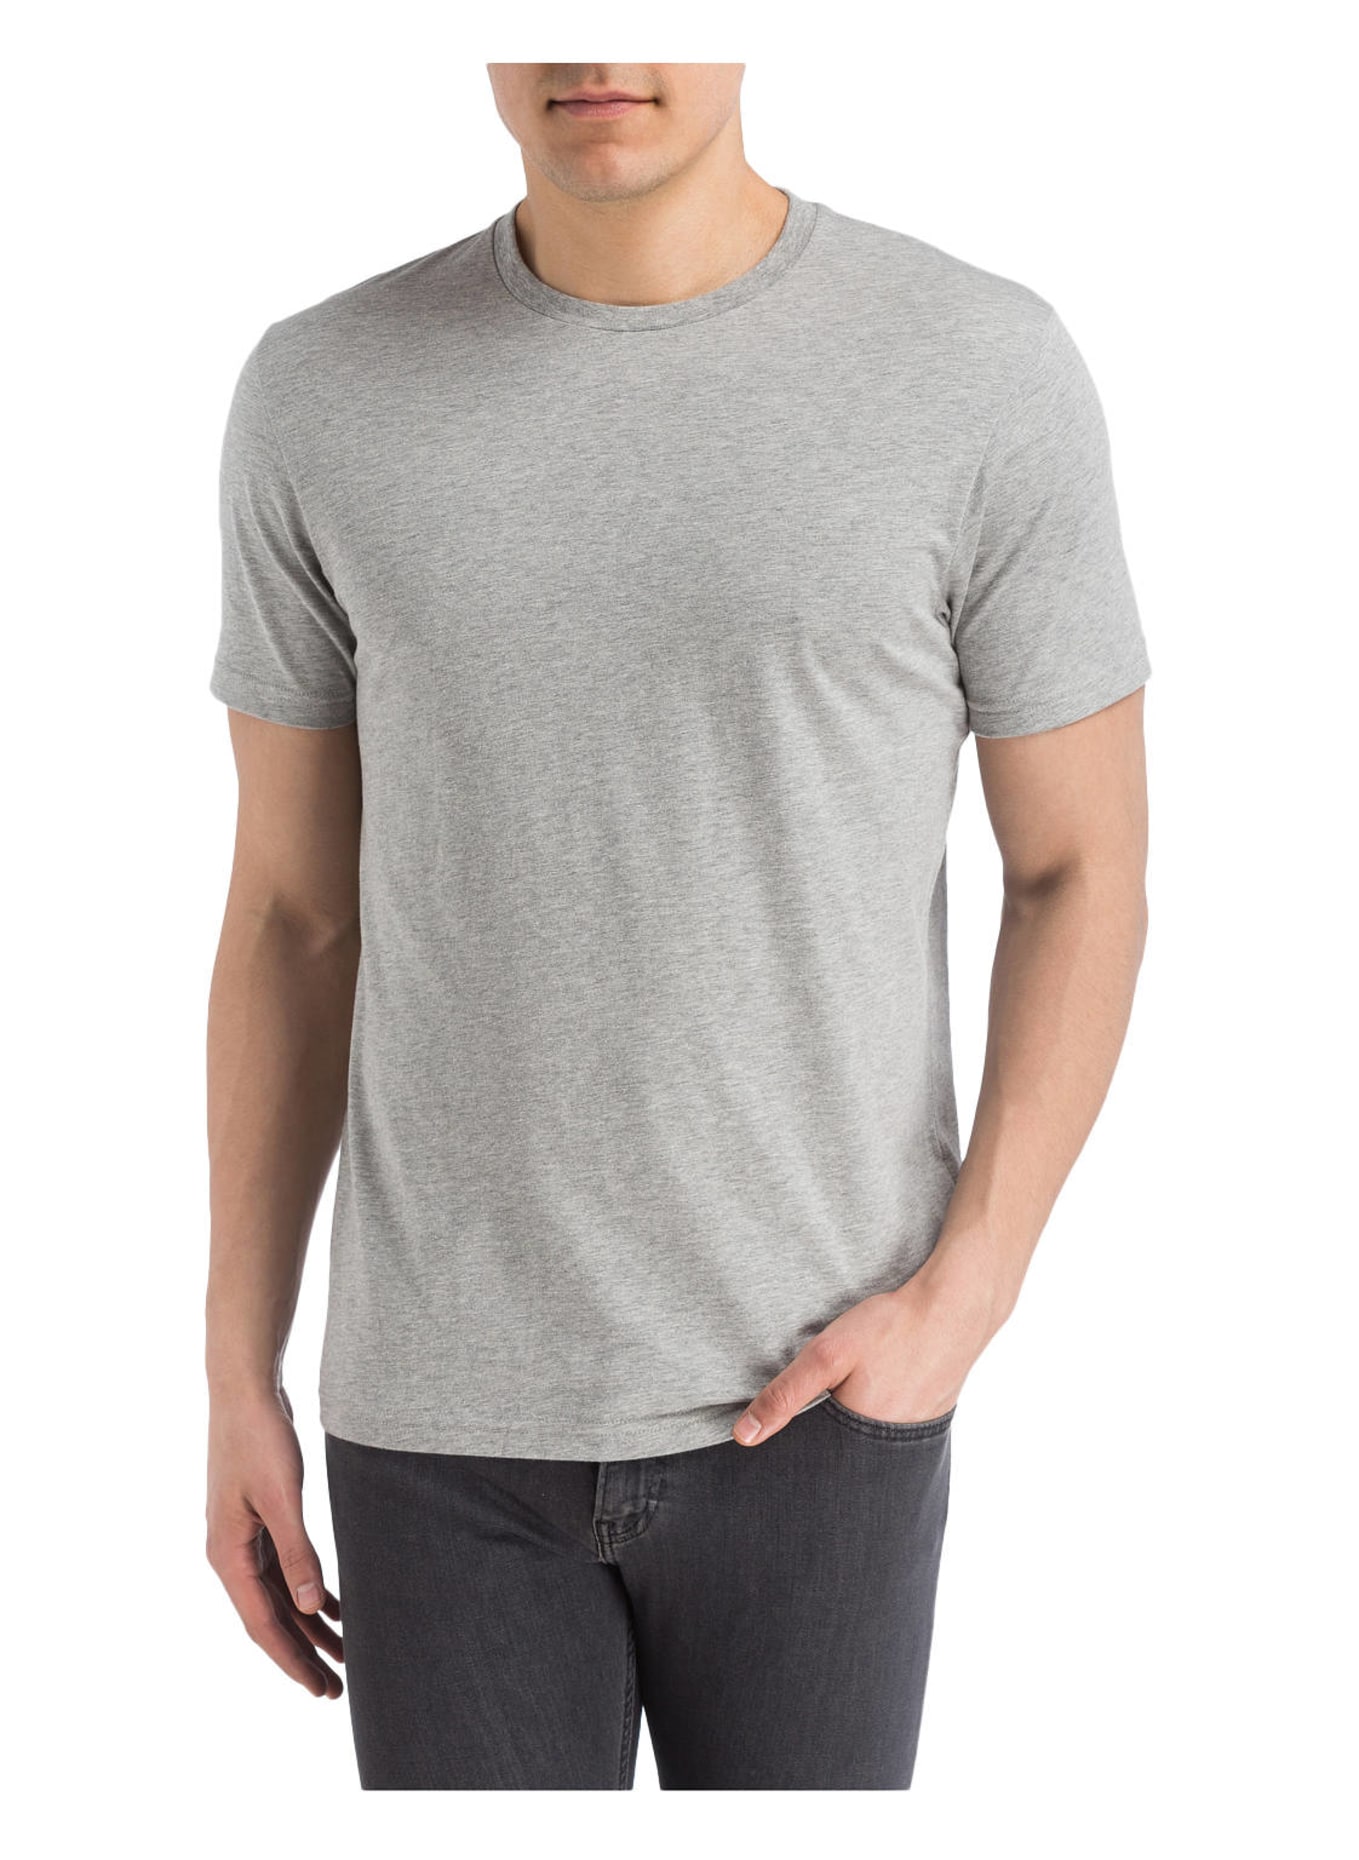 RAGMAN T-shirt regular mélange in fit gray